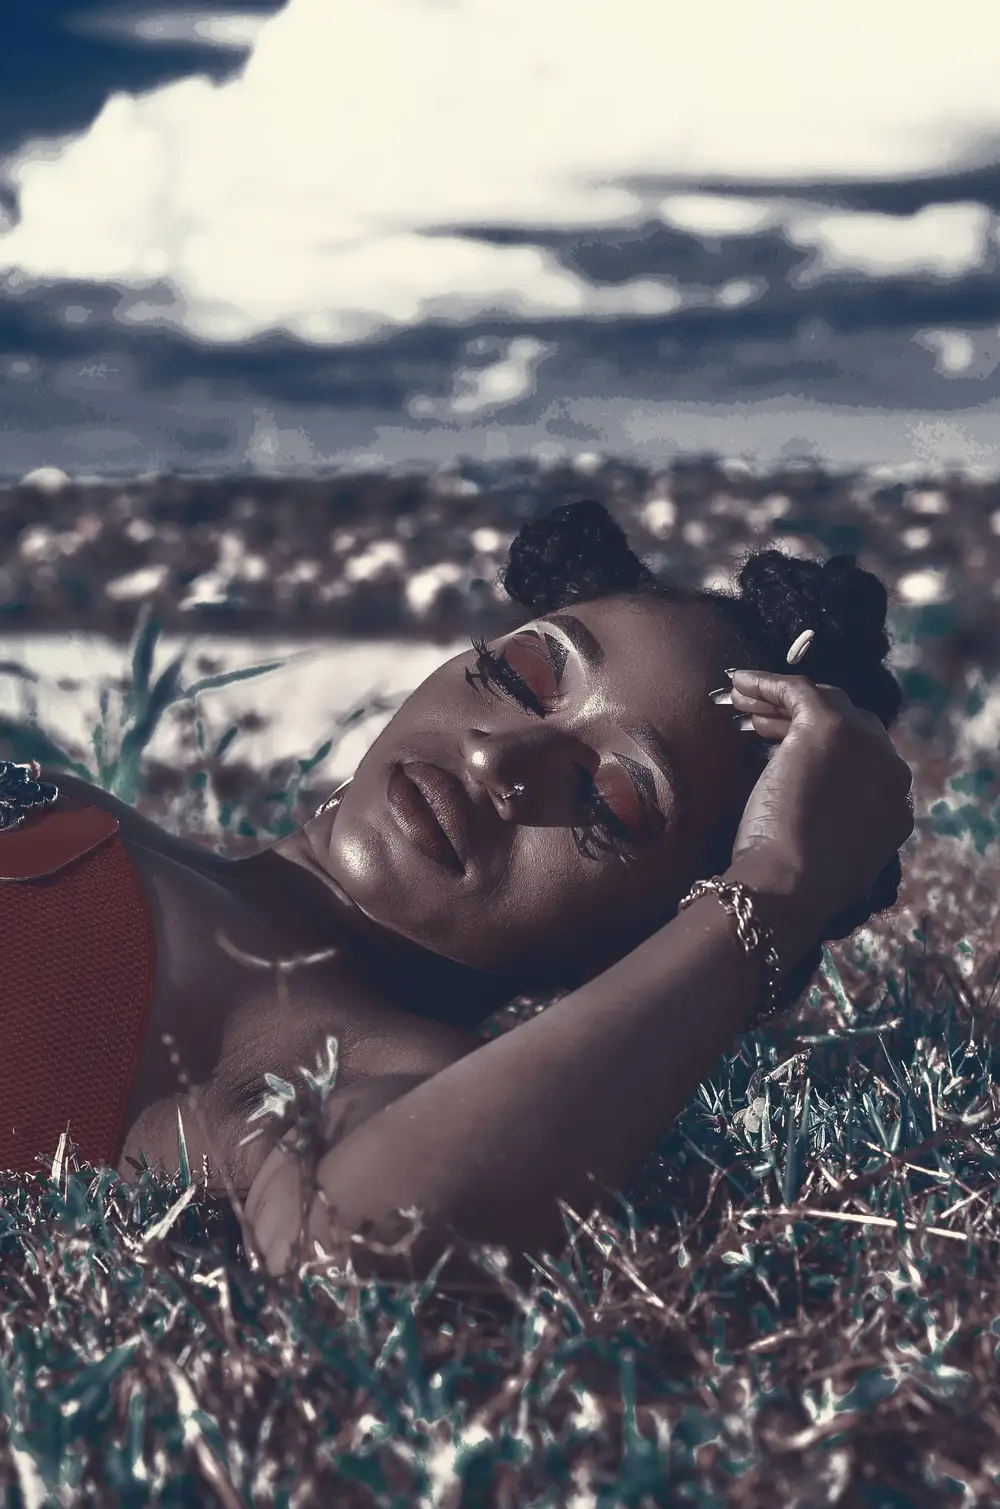 Lady laying on grass